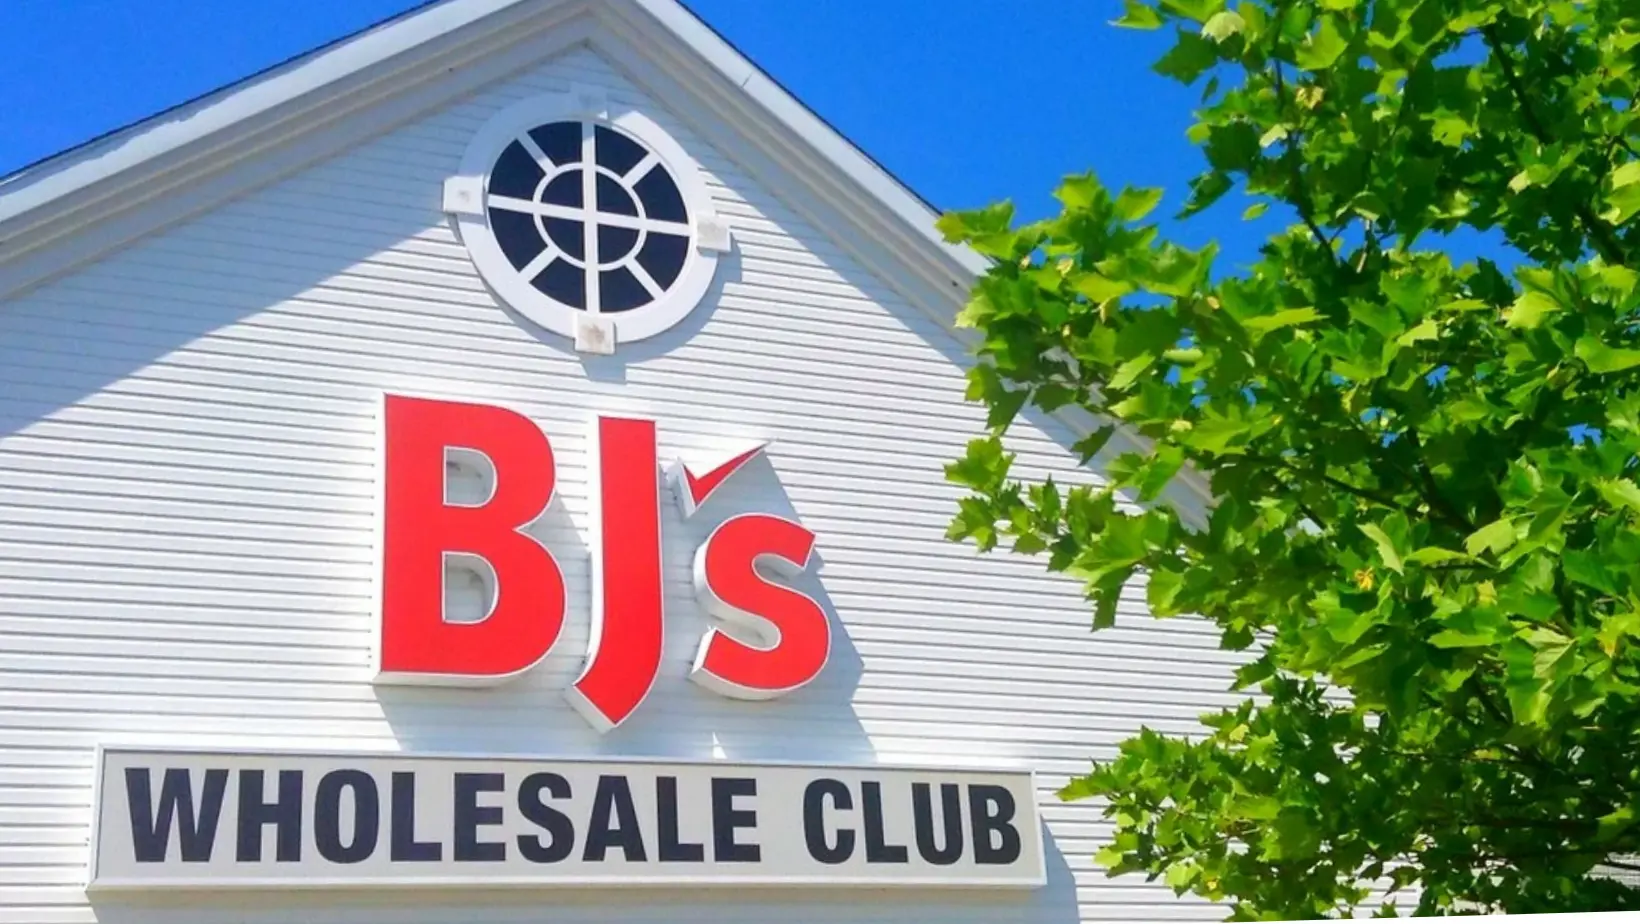 BJs wholesale club